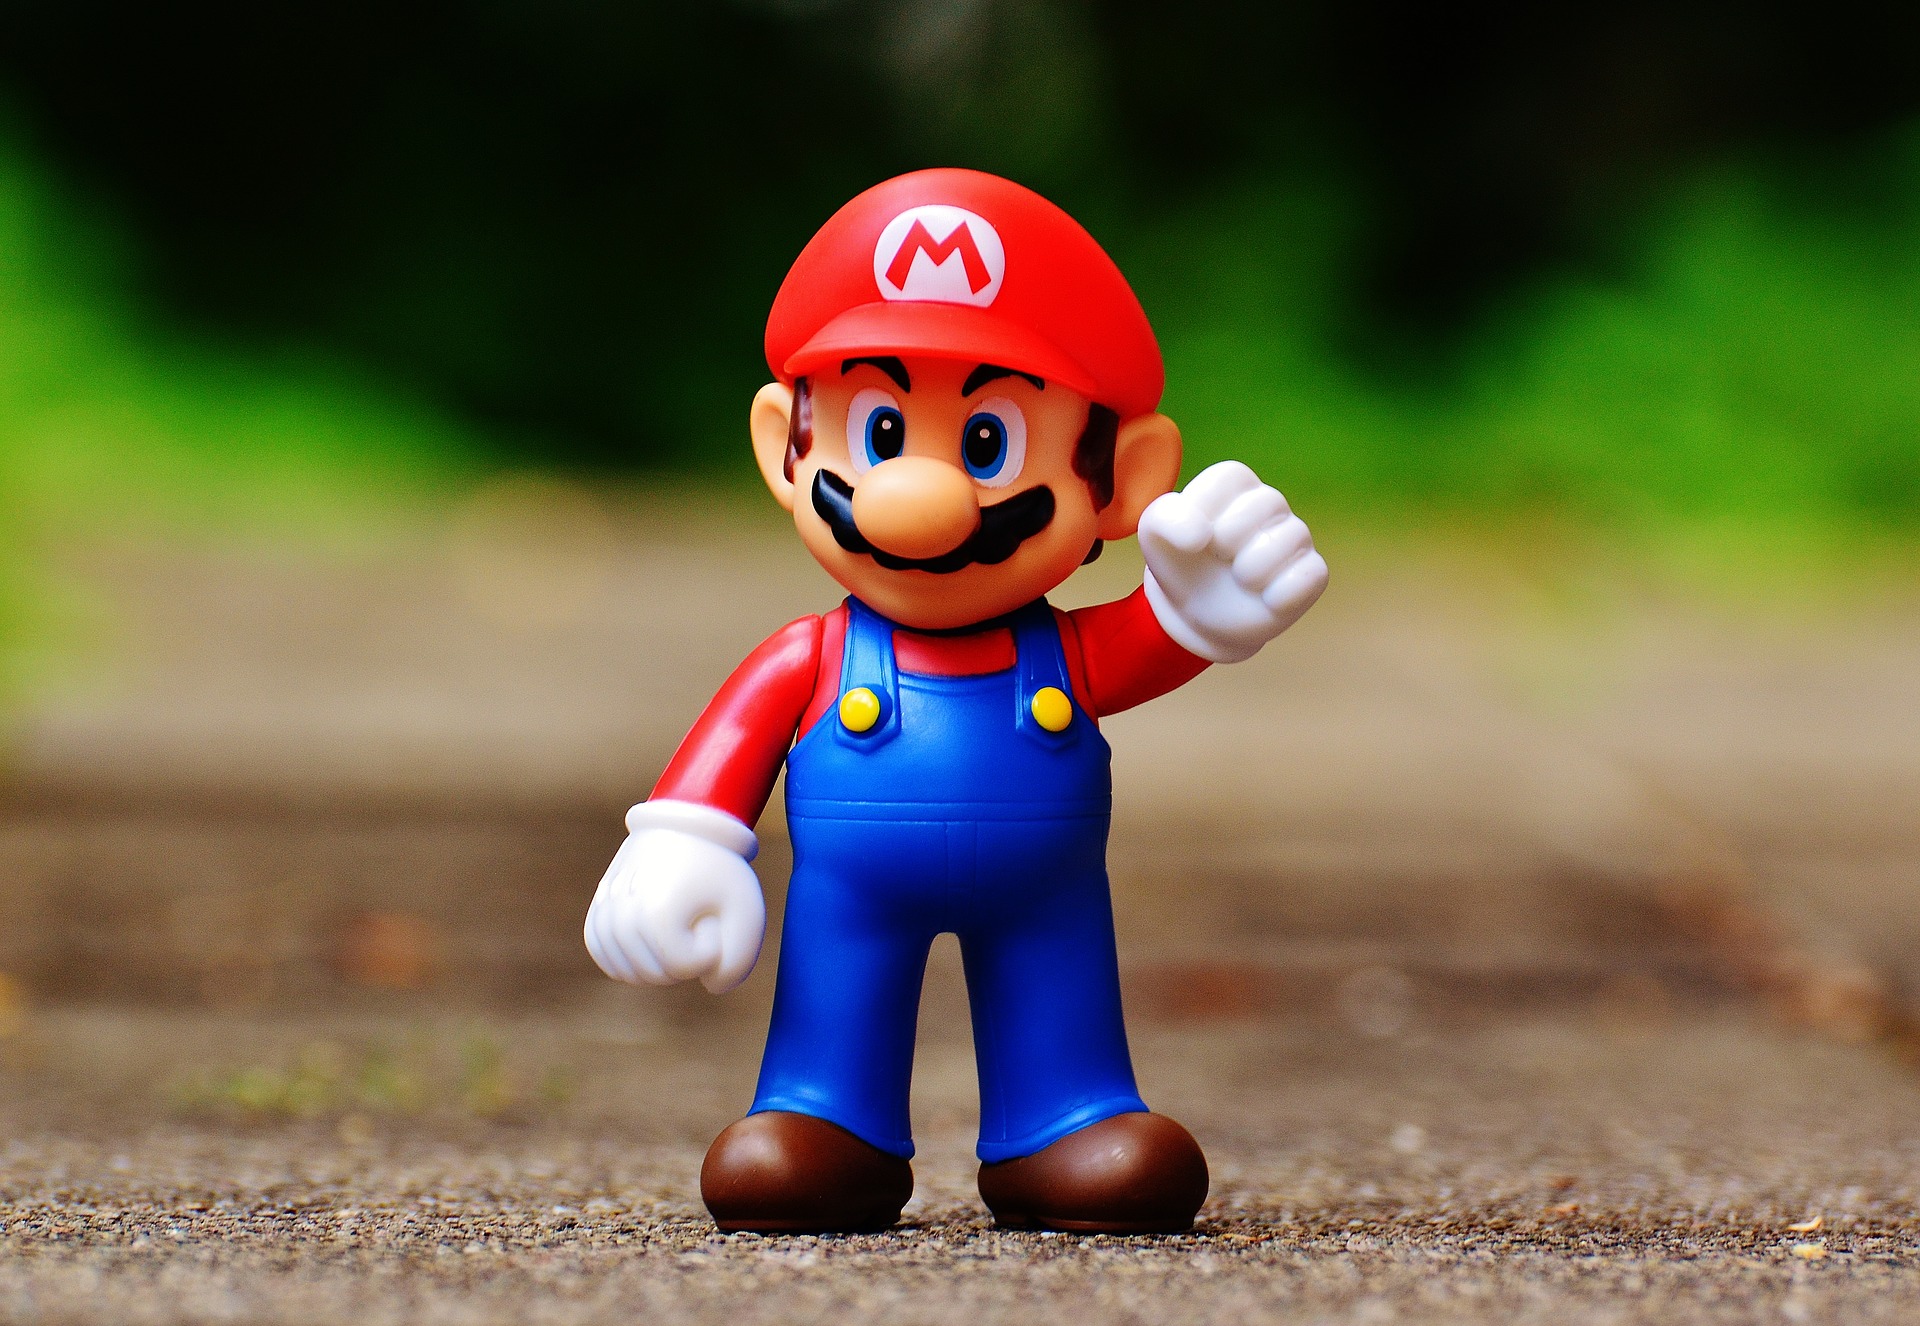 Super Mario,videojogos, Super Mario kart está entre os videojogos mais stressantes segundo estudo